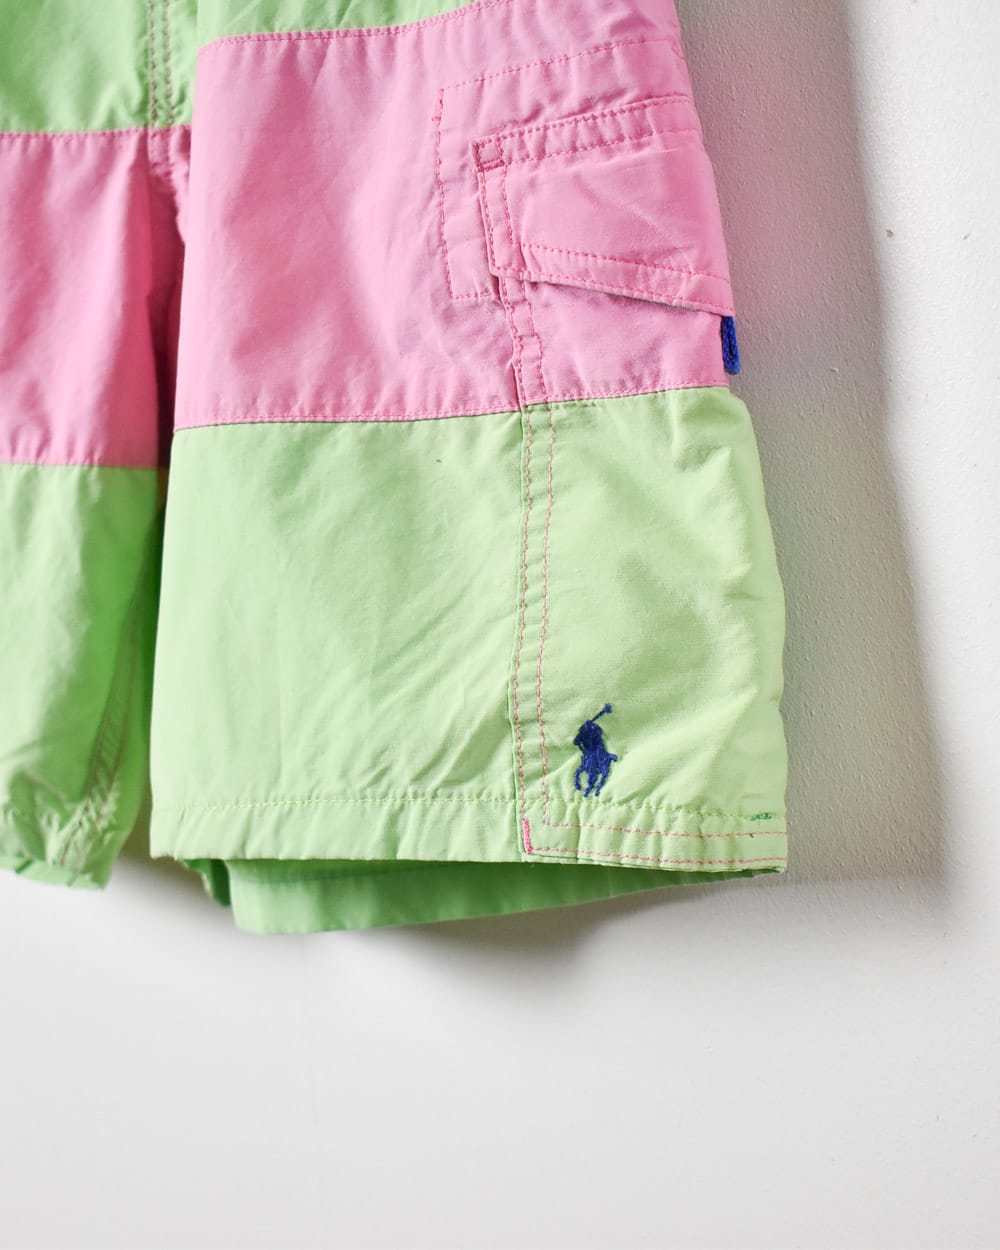 Green Polo Ralph Lauren Mesh Shorts - Large